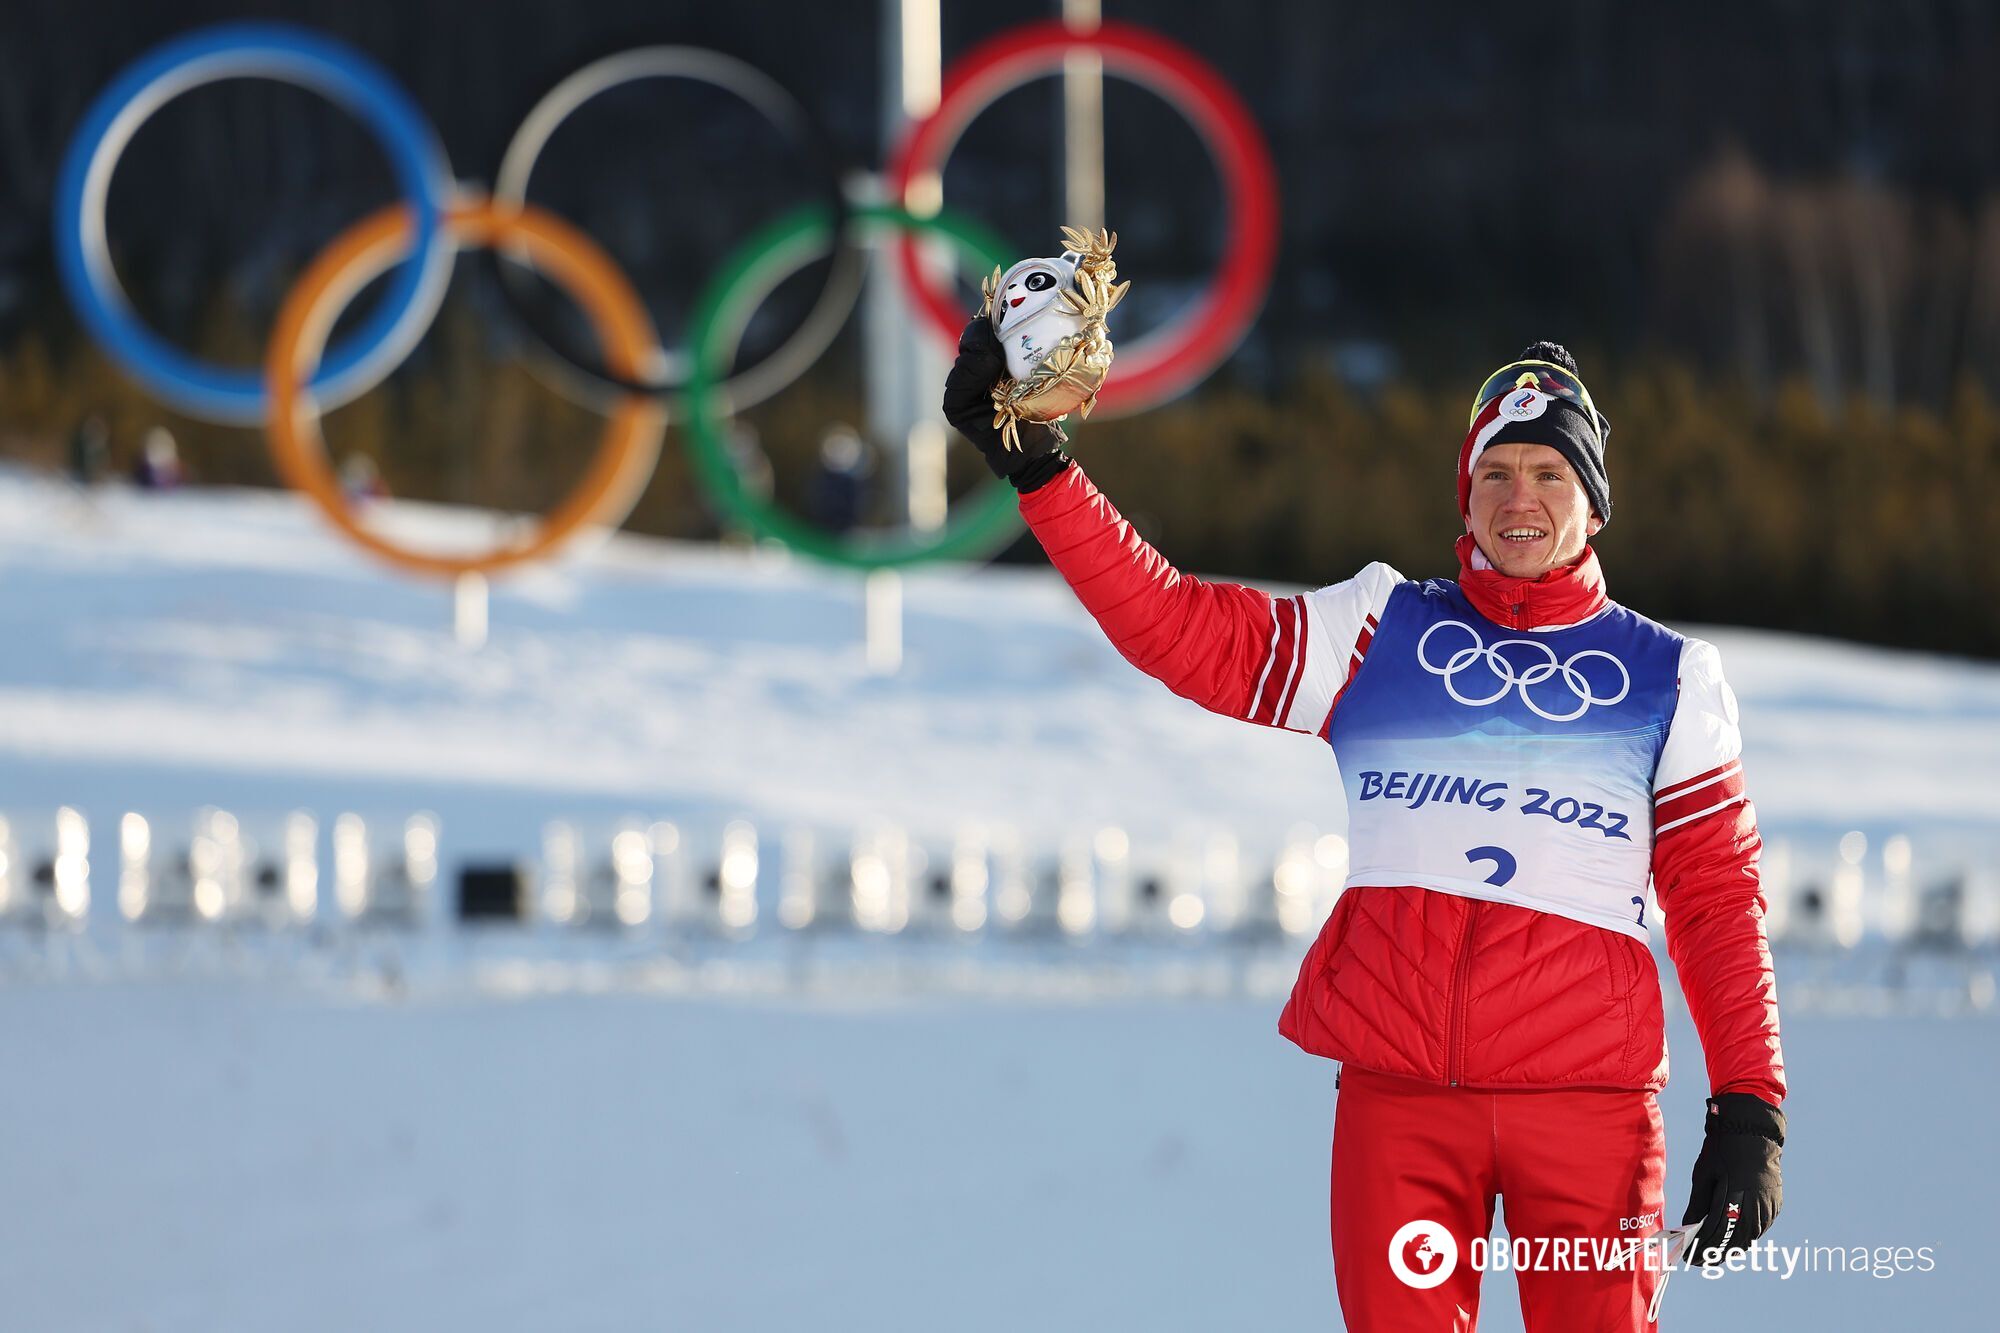 Alexander Bolshunov at the 2022 Olympics